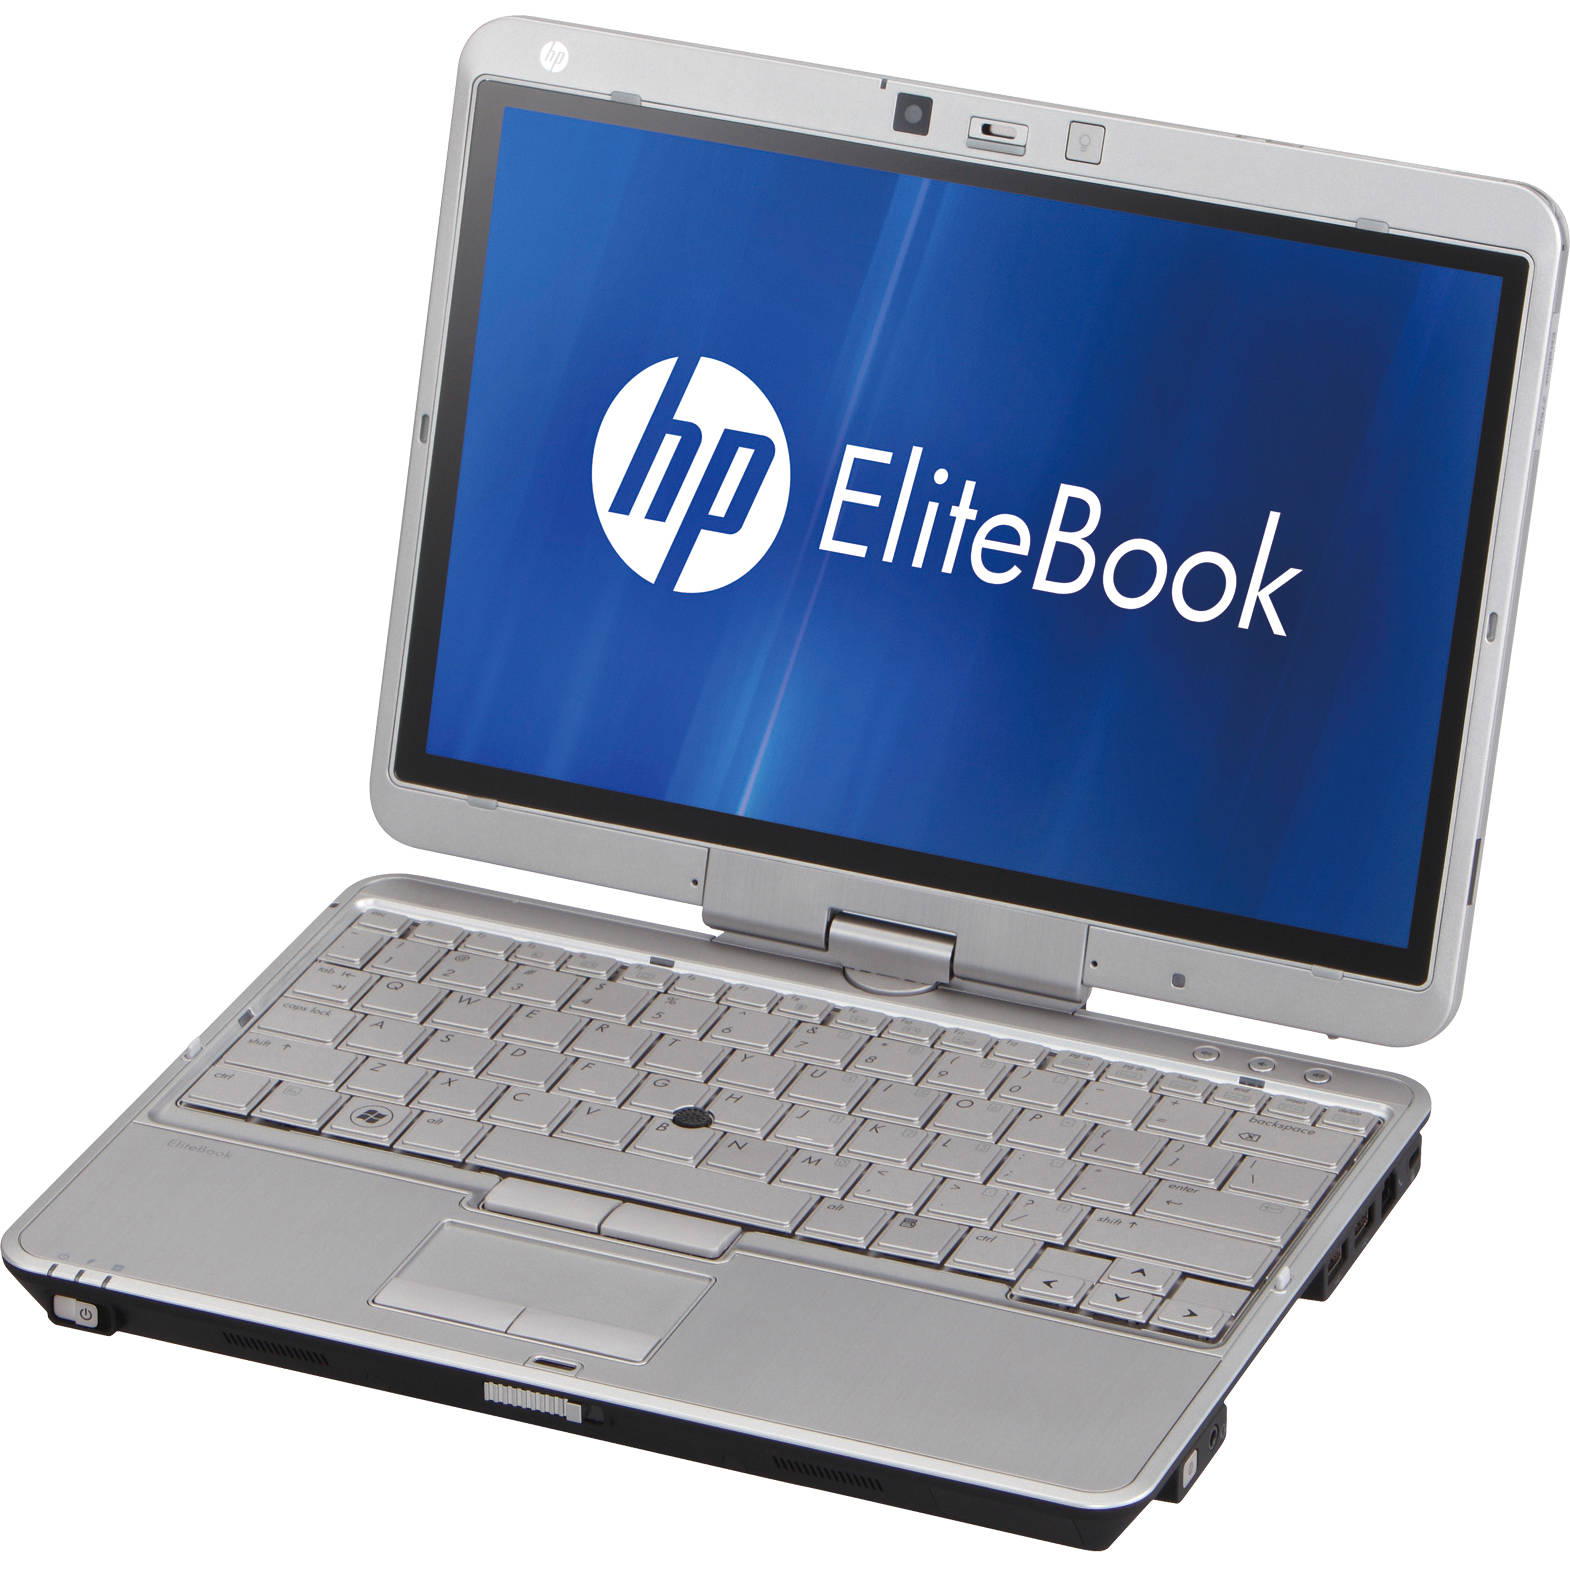 NOTEBOOK HP ELITEBOOK 2760P I5 2520M 2.5GHz 3M 2G 250 VGA INTEL HD 3000 LED 12.1 / 360  ALUMINIUM SILVER مستعمل بطاريه ساعتين بدون سواقه  مع قلم ,Used Laptops